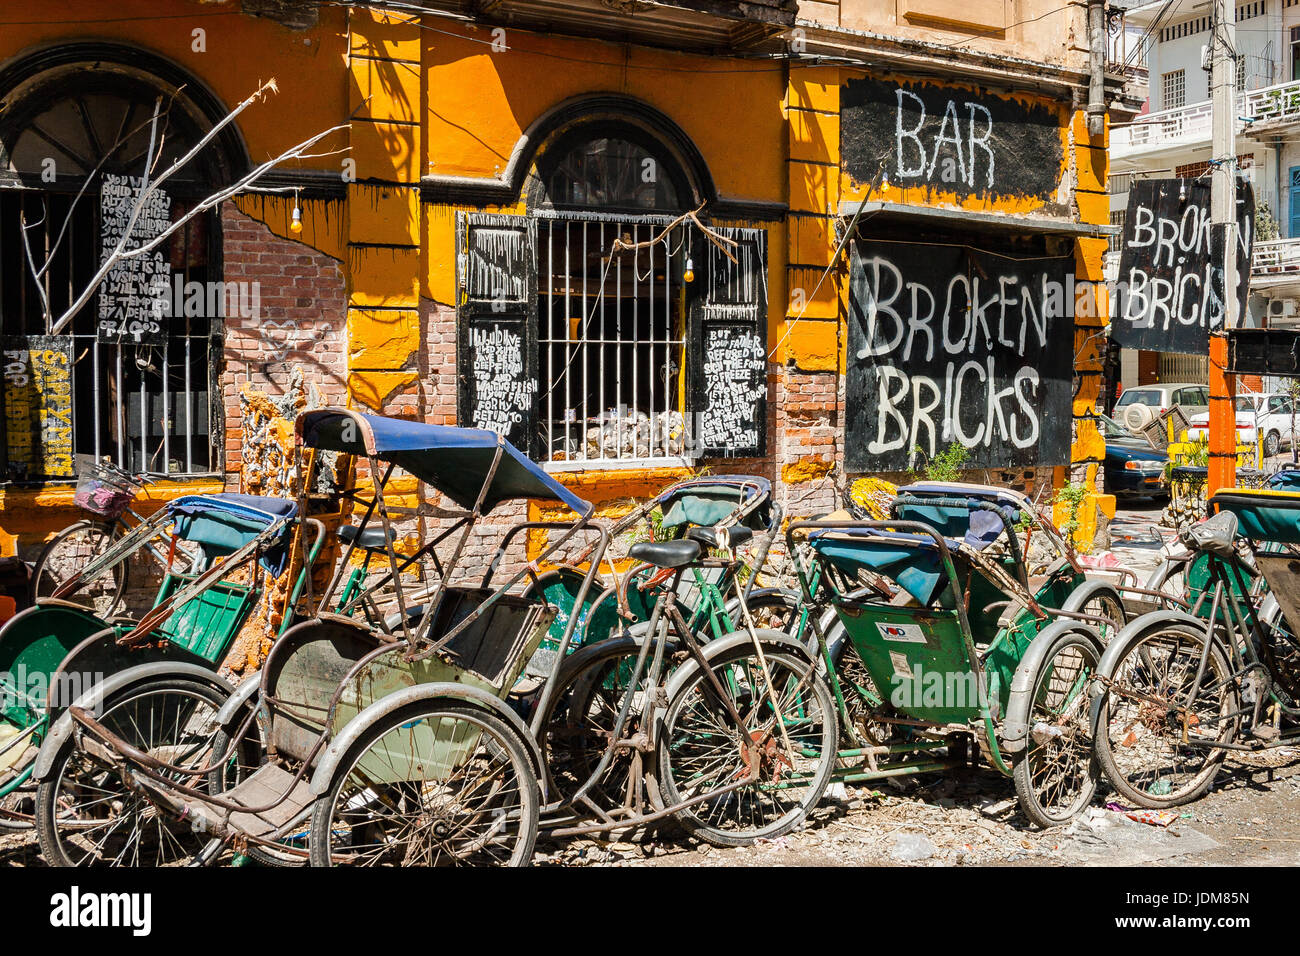 Broken Bricks Bar, trishaws and graffiti art. Phnom Penh, Cambodia. Stock Photo